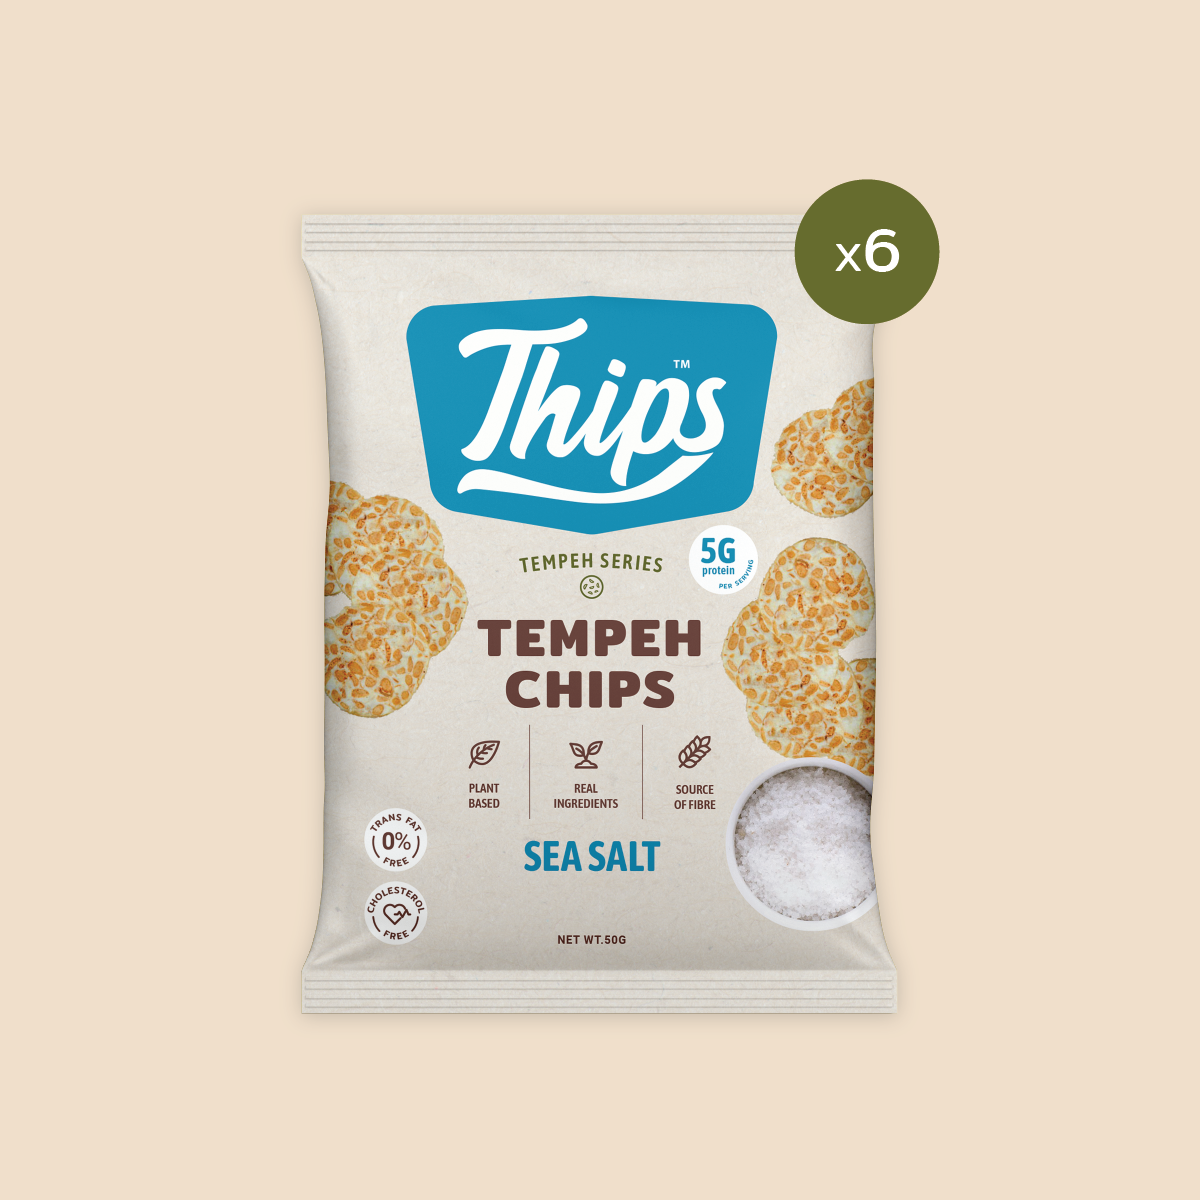 [Bundle of 6, 12, 24] Thips Sea Salt Tempeh Chips